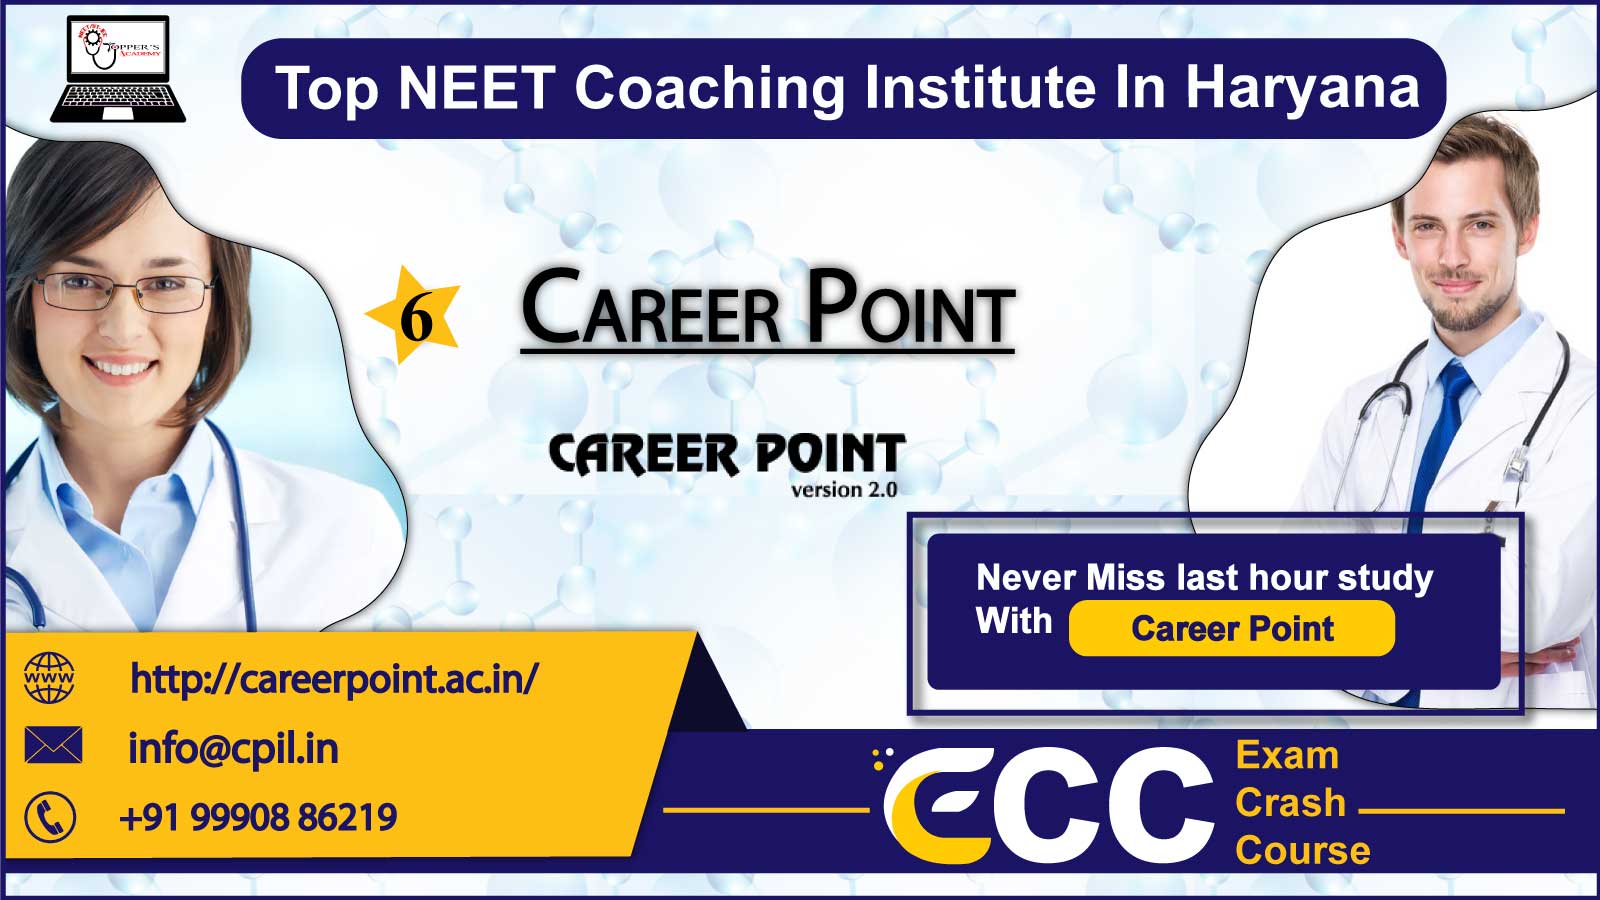 Career Point NEET Coaching Institute In Haryana